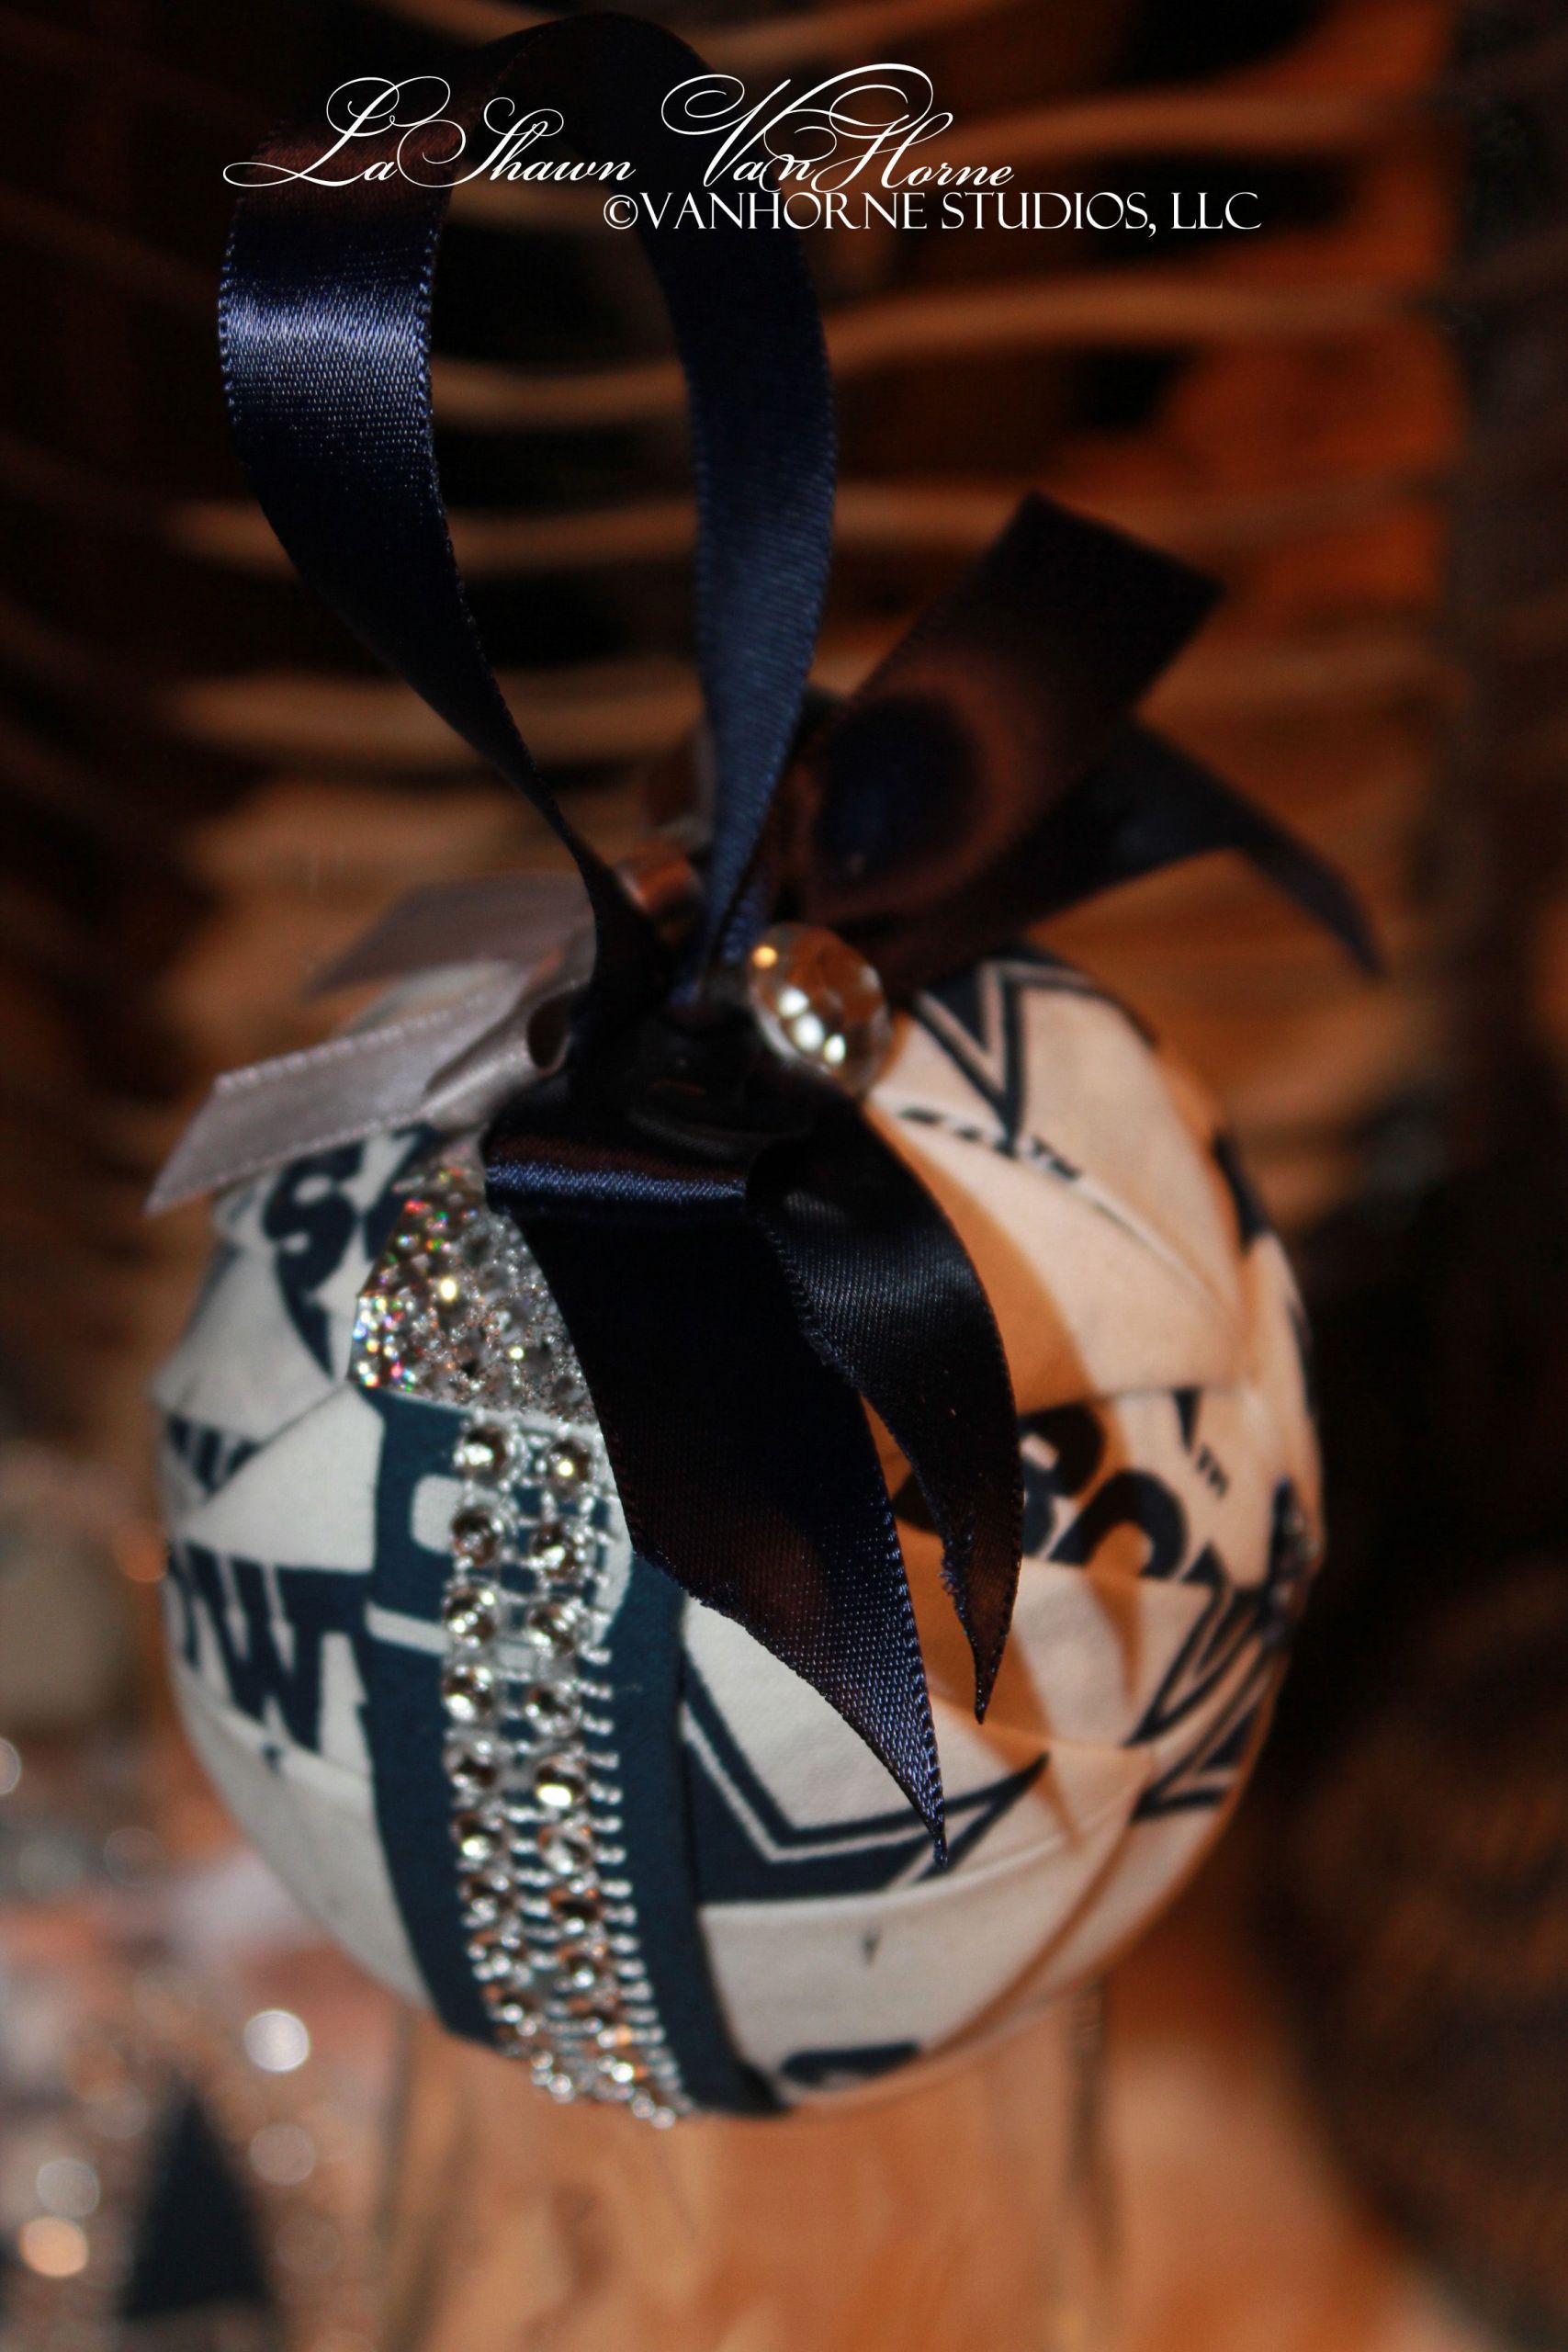 Dallas Cowboys Christmas Gift Ideas
 Dallas Cowboys Ornament